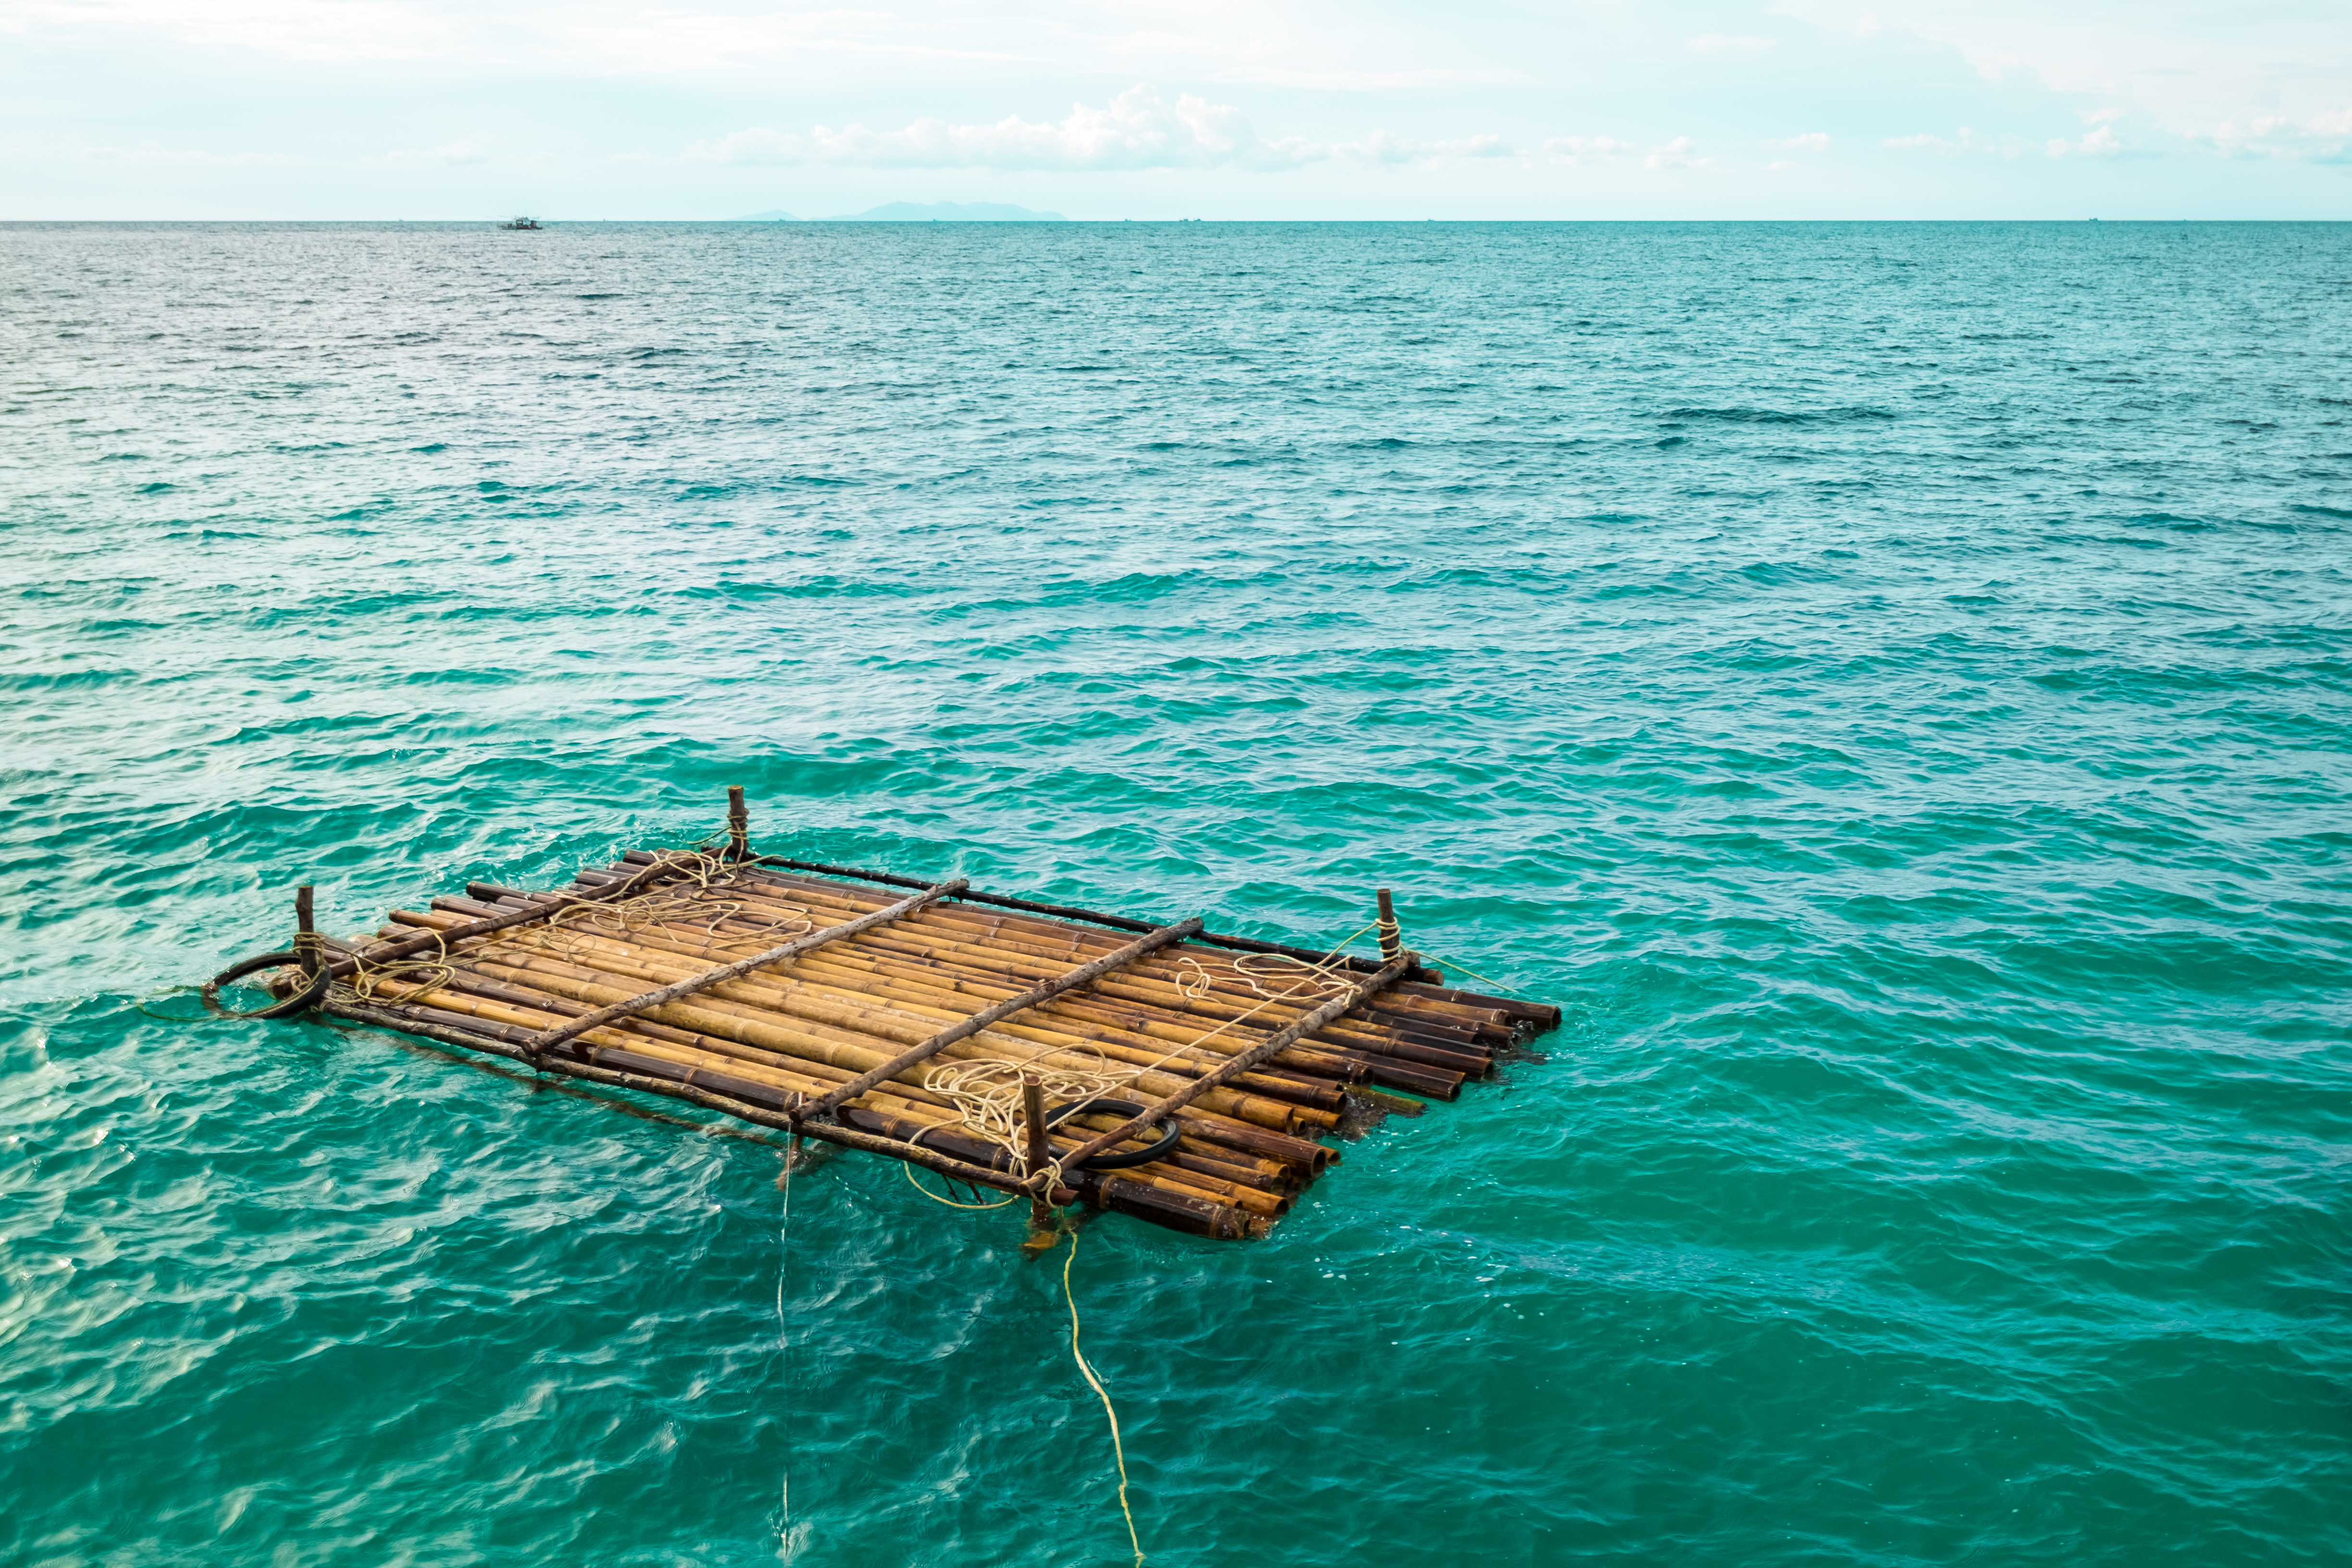 Wooden raft is floating in water. | Source: Shutterstock